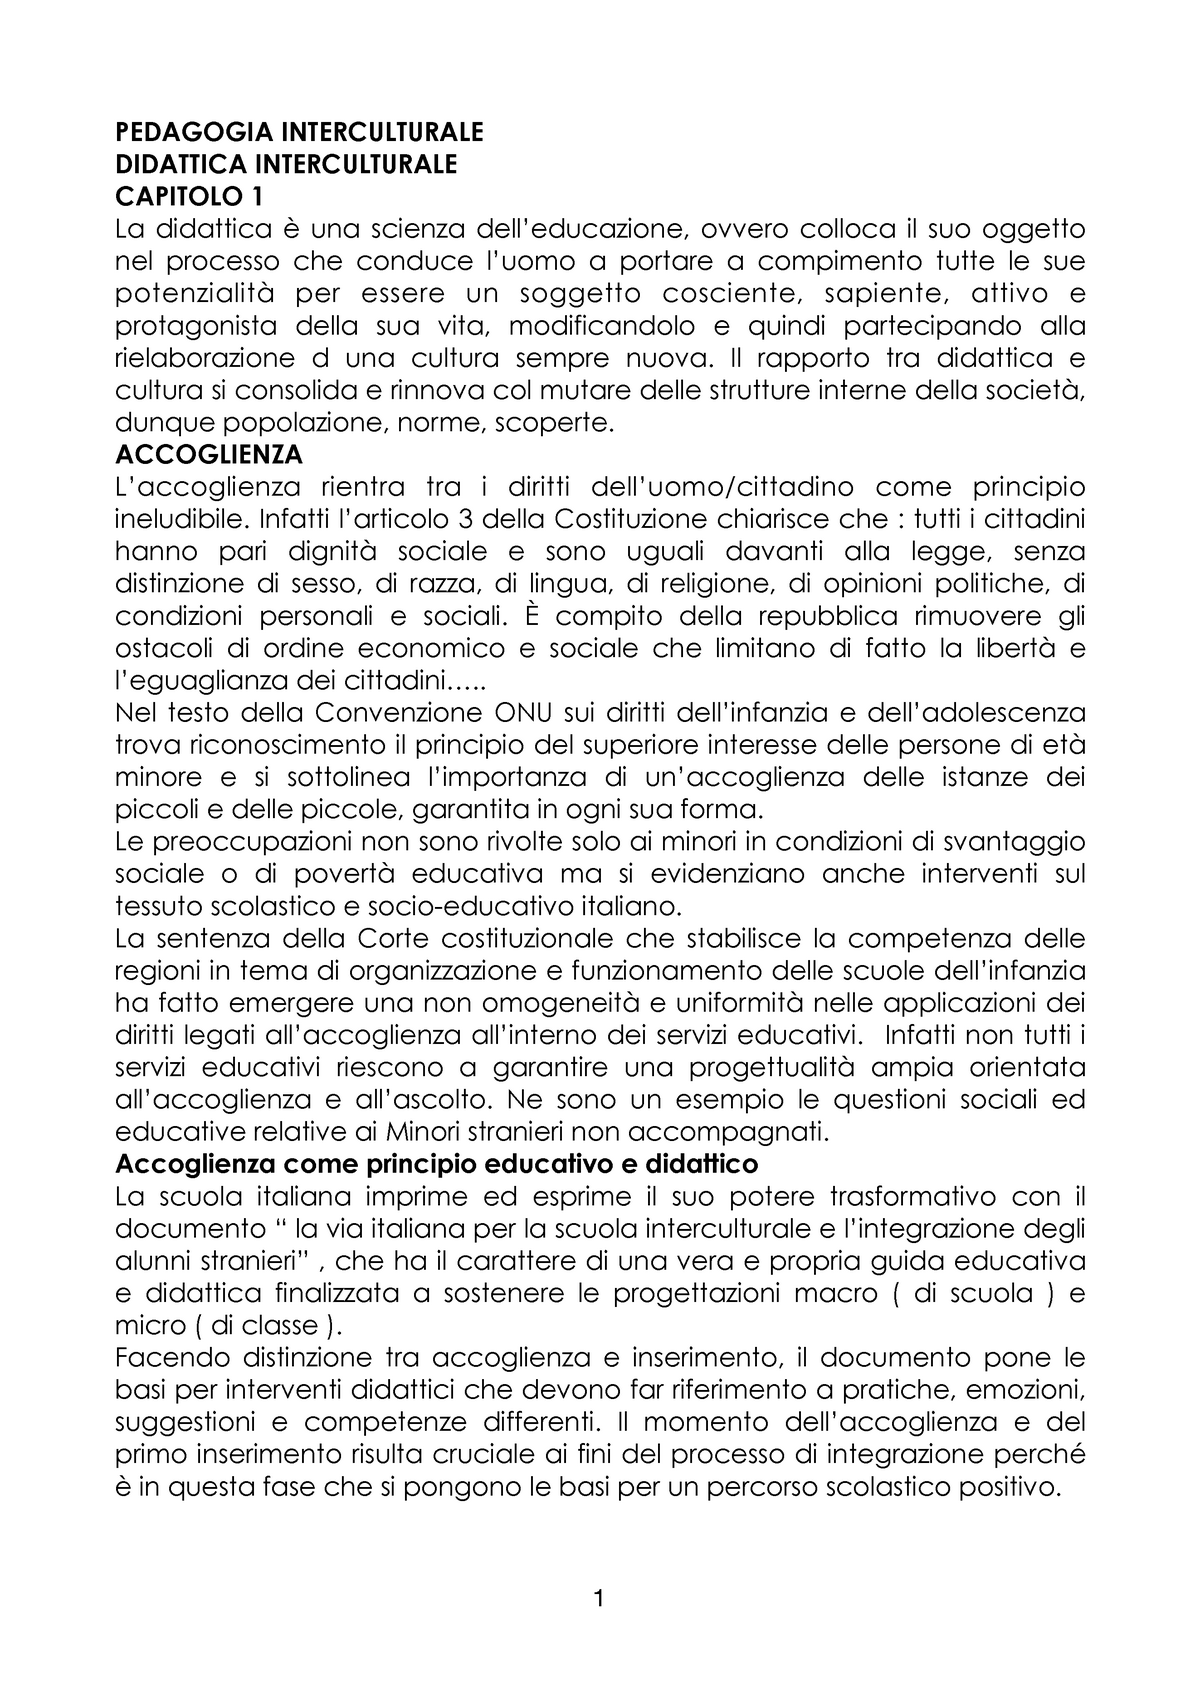 Didattica Interculturale riassunto - PEDAGOGIA INTERCULTURALE DIDATTICA  INTERCULTURALE CAPITOLO 1 La - Studocu